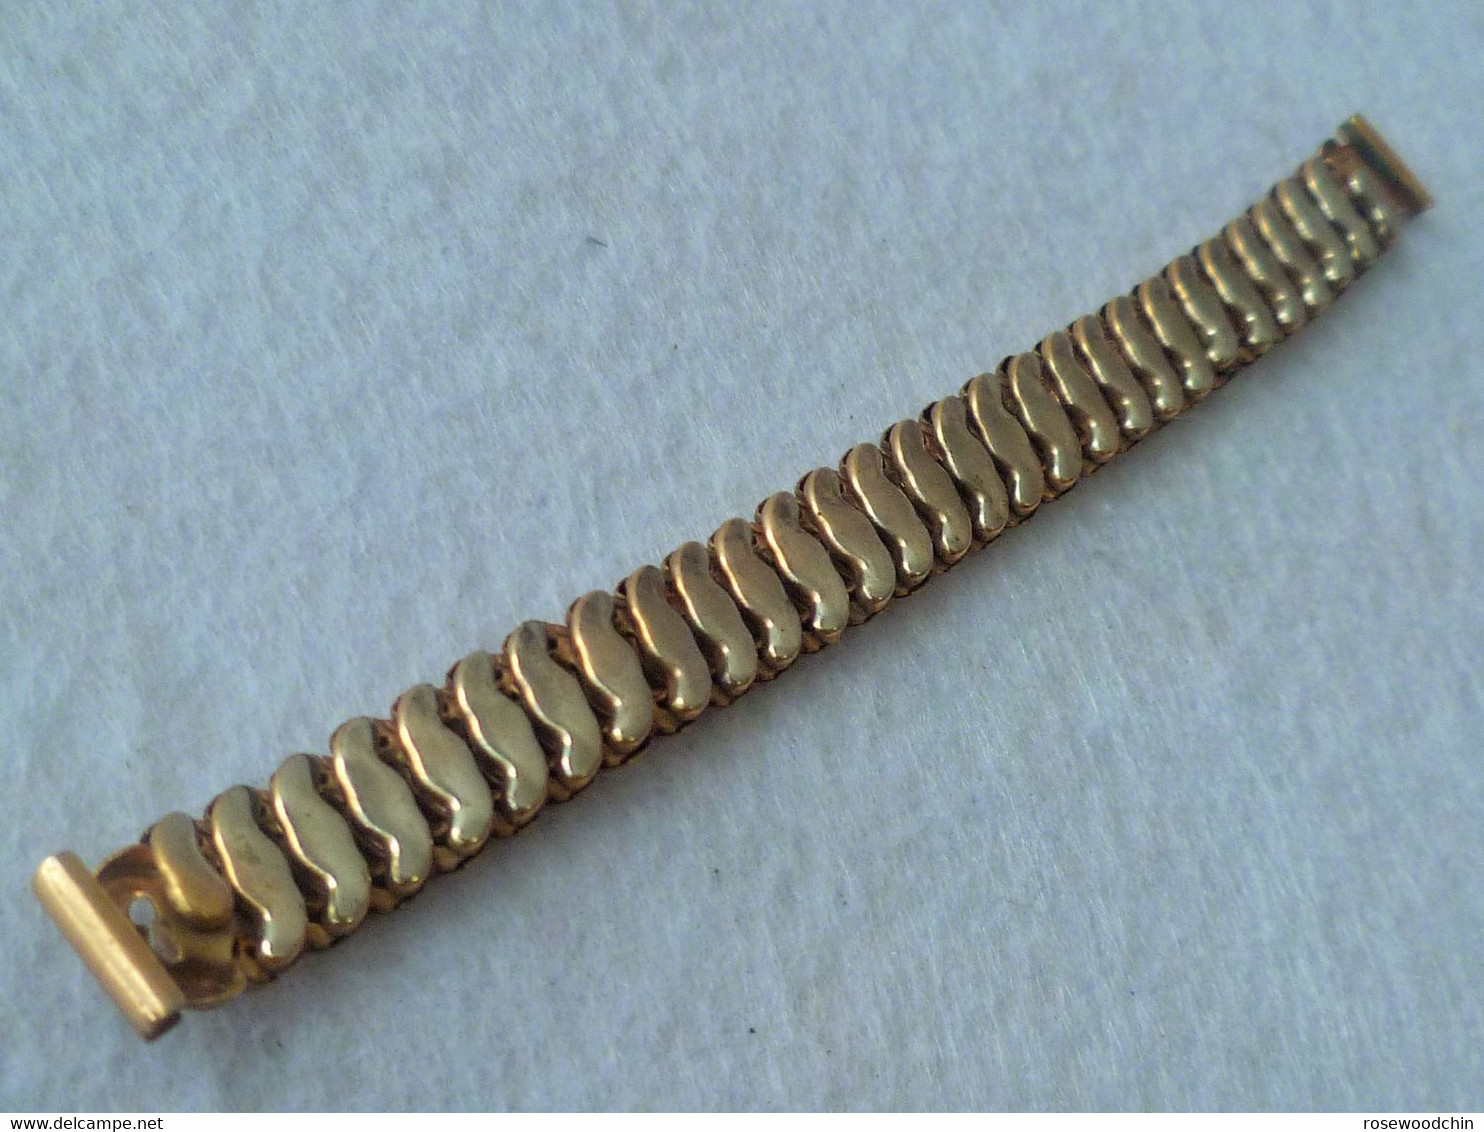 Vintage Gold Tone Expansion Lady Watch Bracelet Band Lug 10/11 mm (#61)